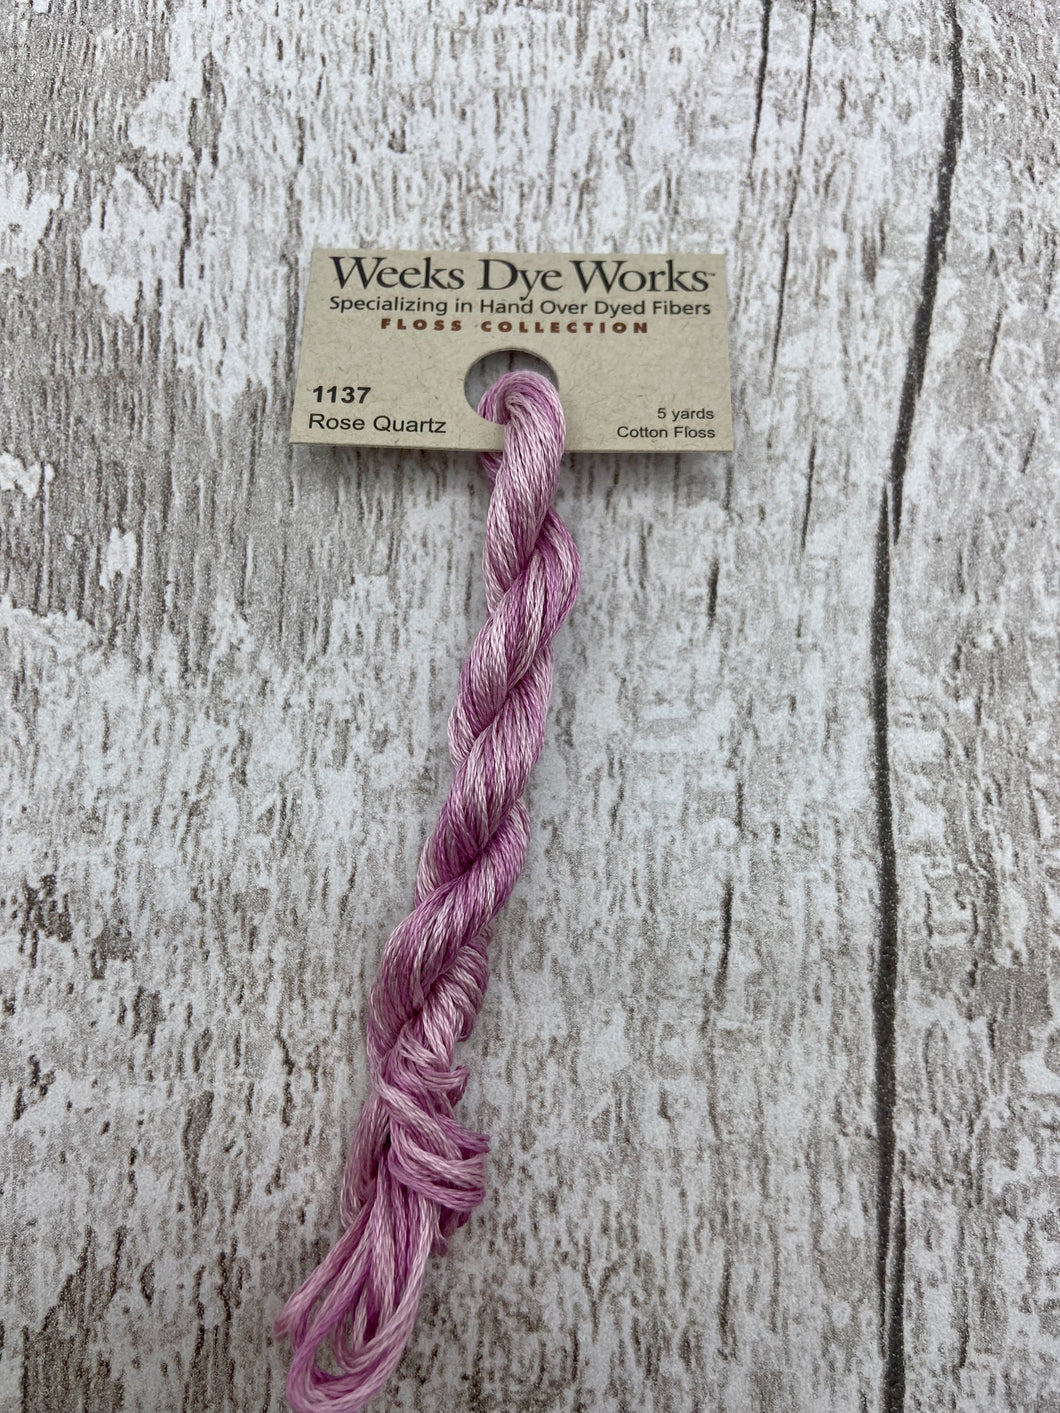 Rose Quartz (#1137) Weeks Dye Works 6-strand cotton floss